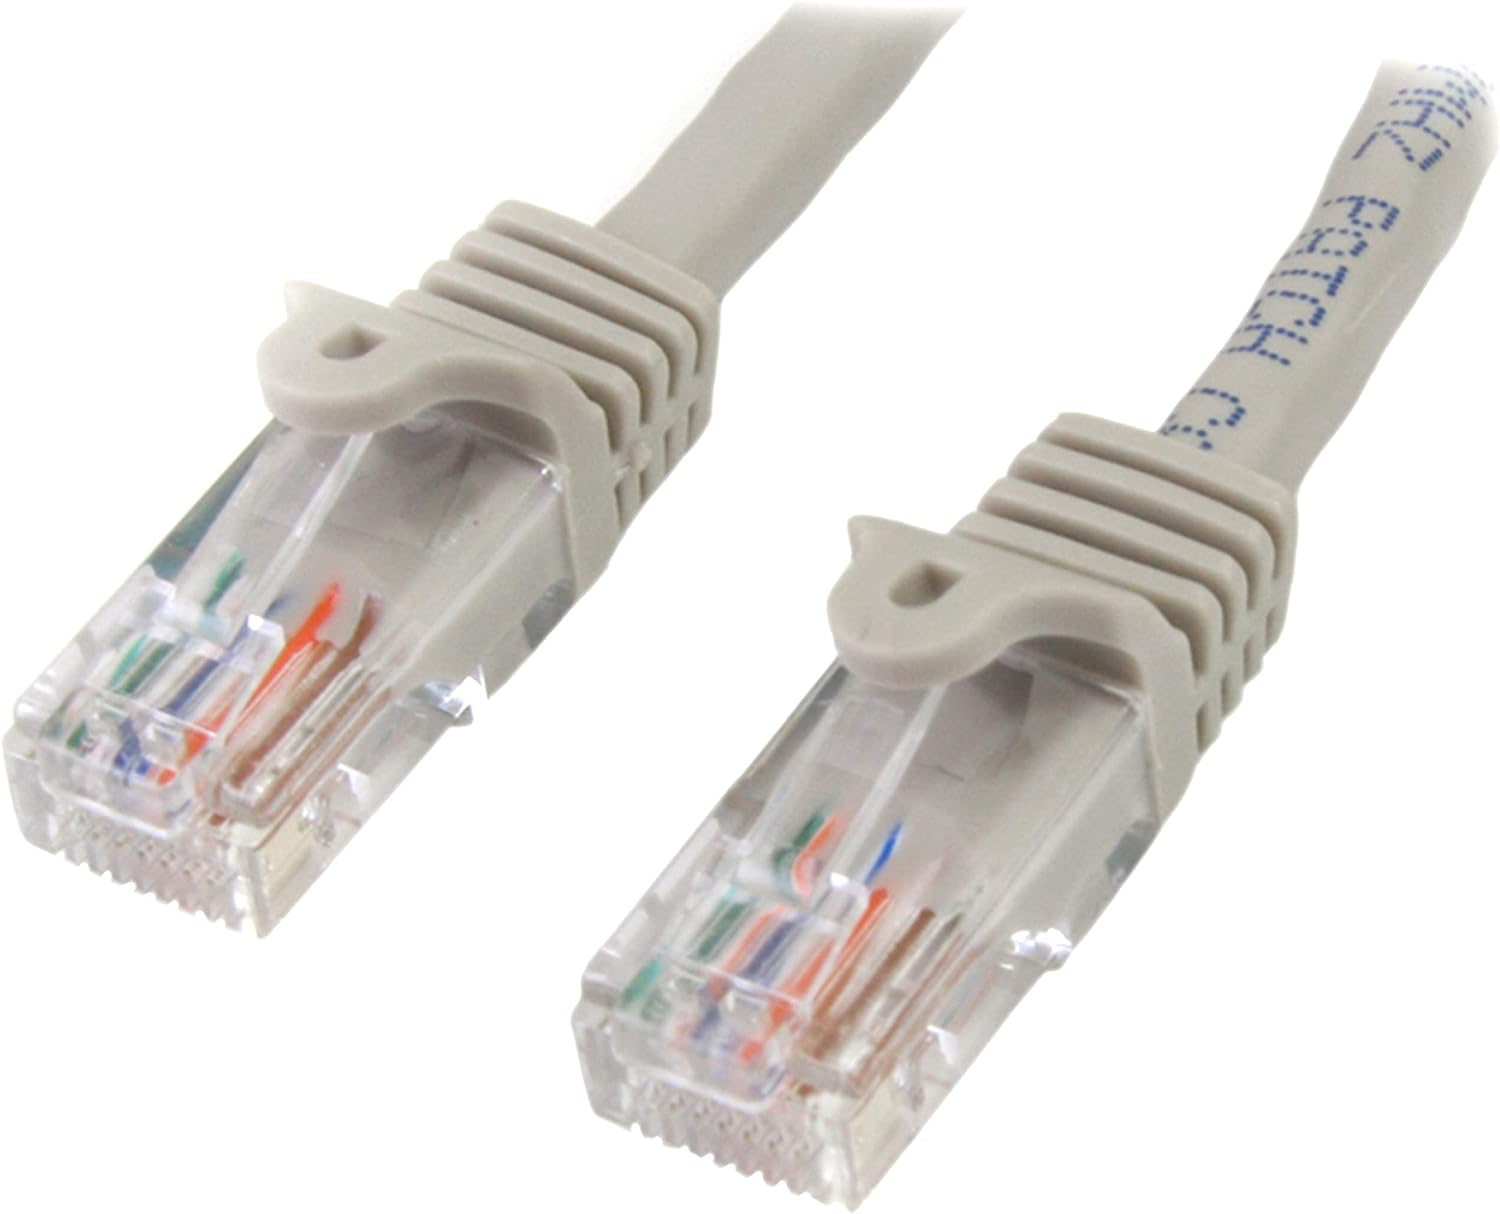 1.5 Metre Cat5e RJ45 Ethernet LAN Cable Lead